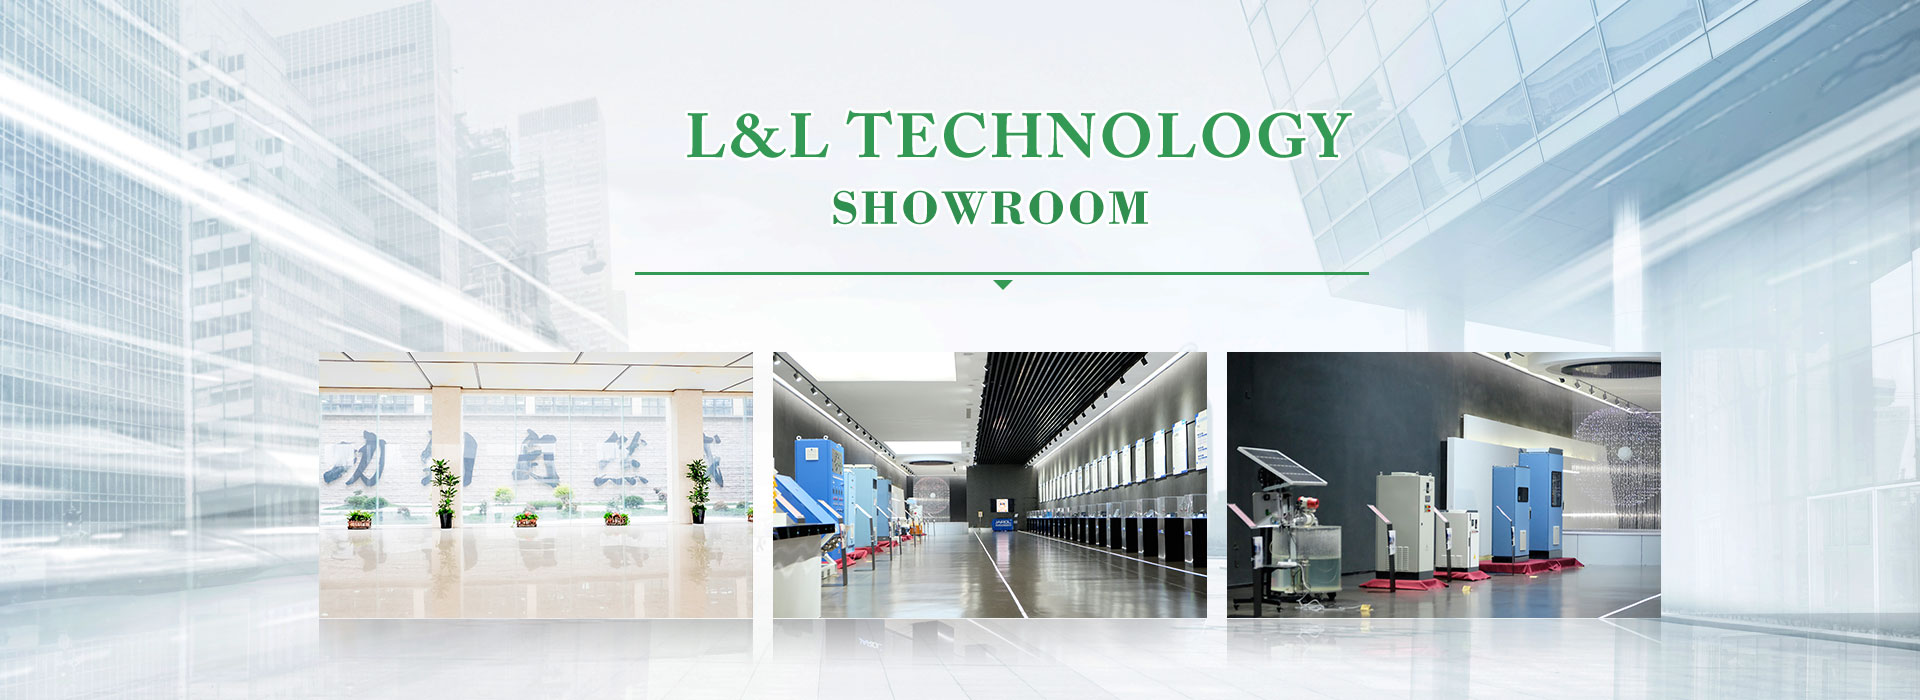 Zhejiang L&L Technology Co., Ltd. Salon wystawowy